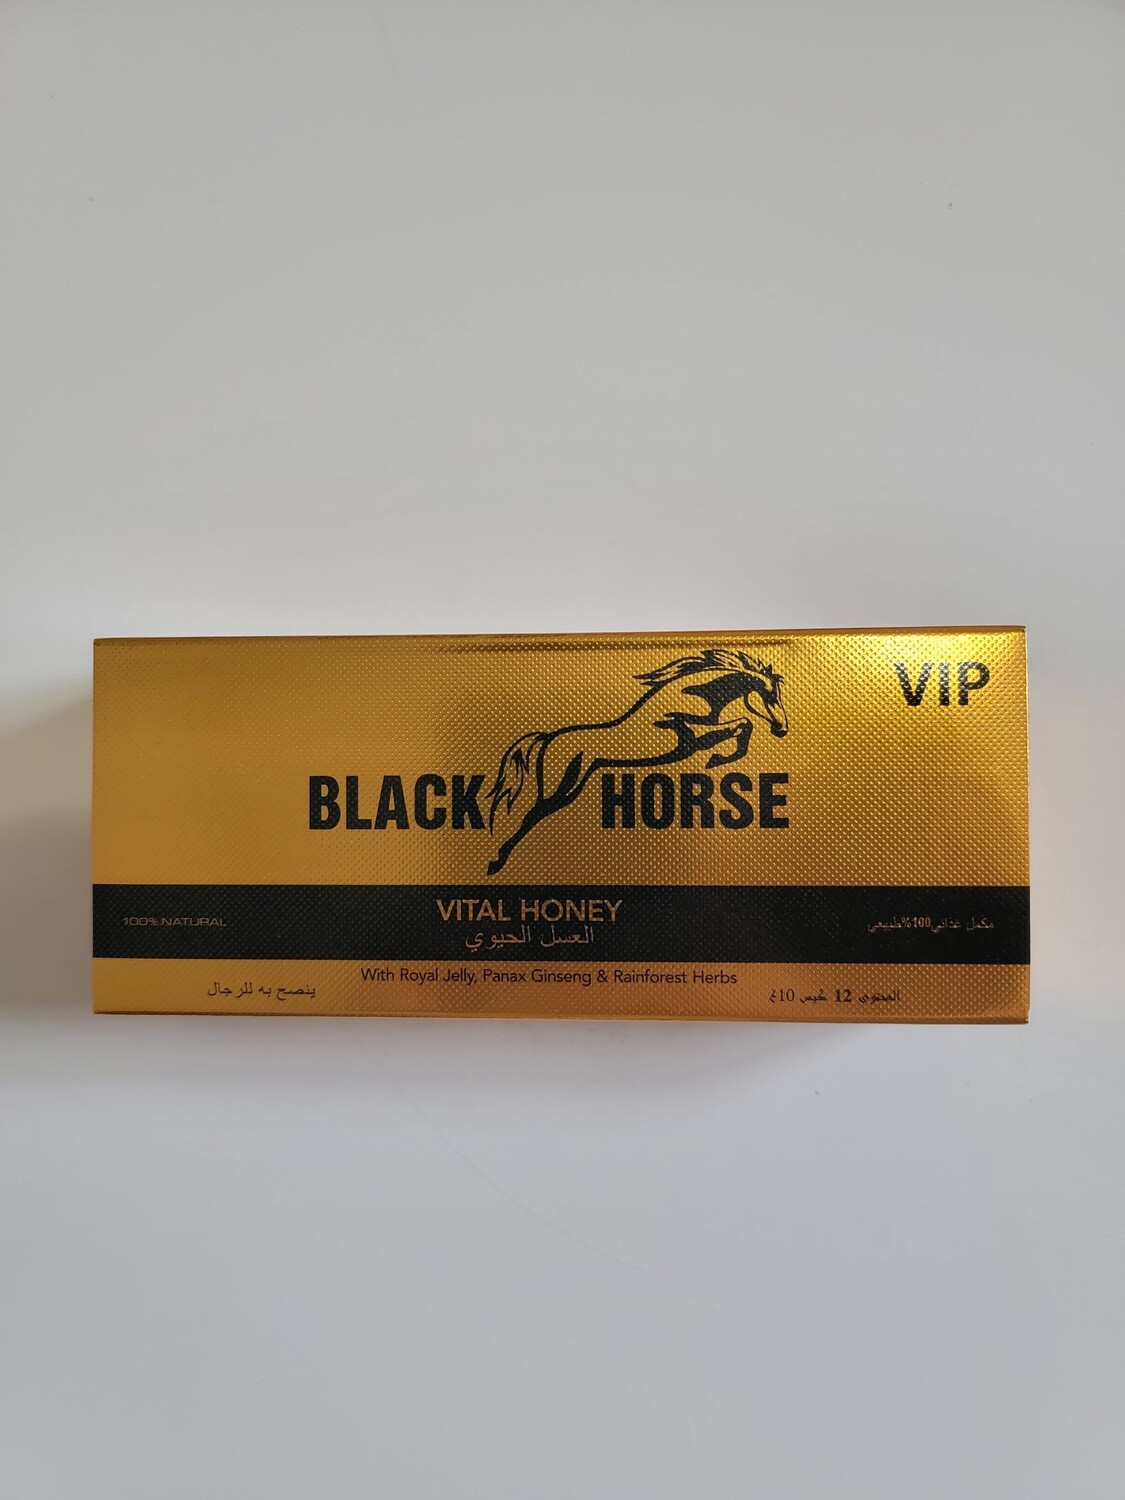 Black Horse Vital Honey 10g x 12